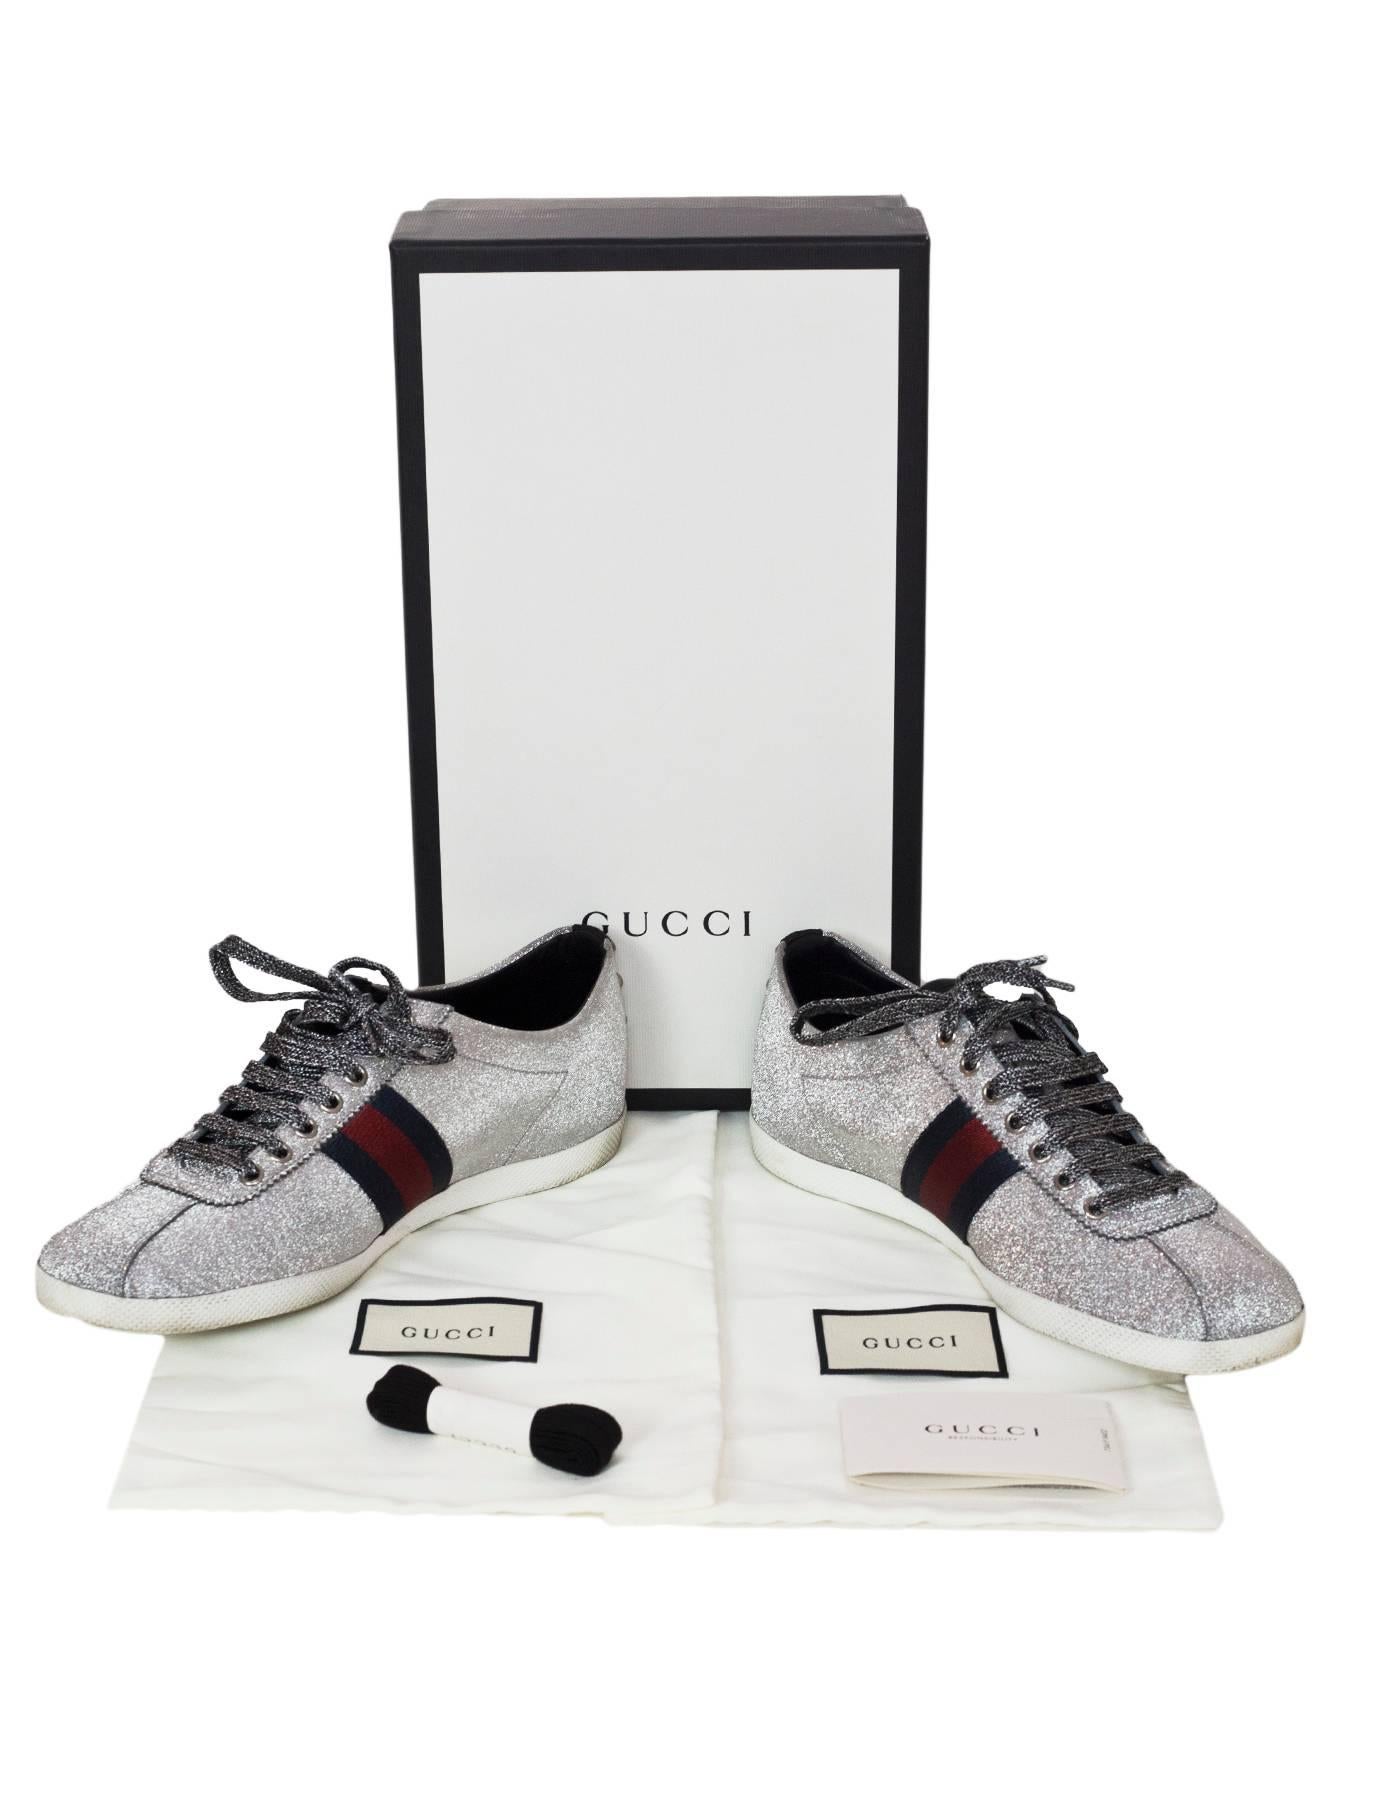 Gucci Men's Silver Glitter & Web Sneakers Sz 9 with Box, DB 3